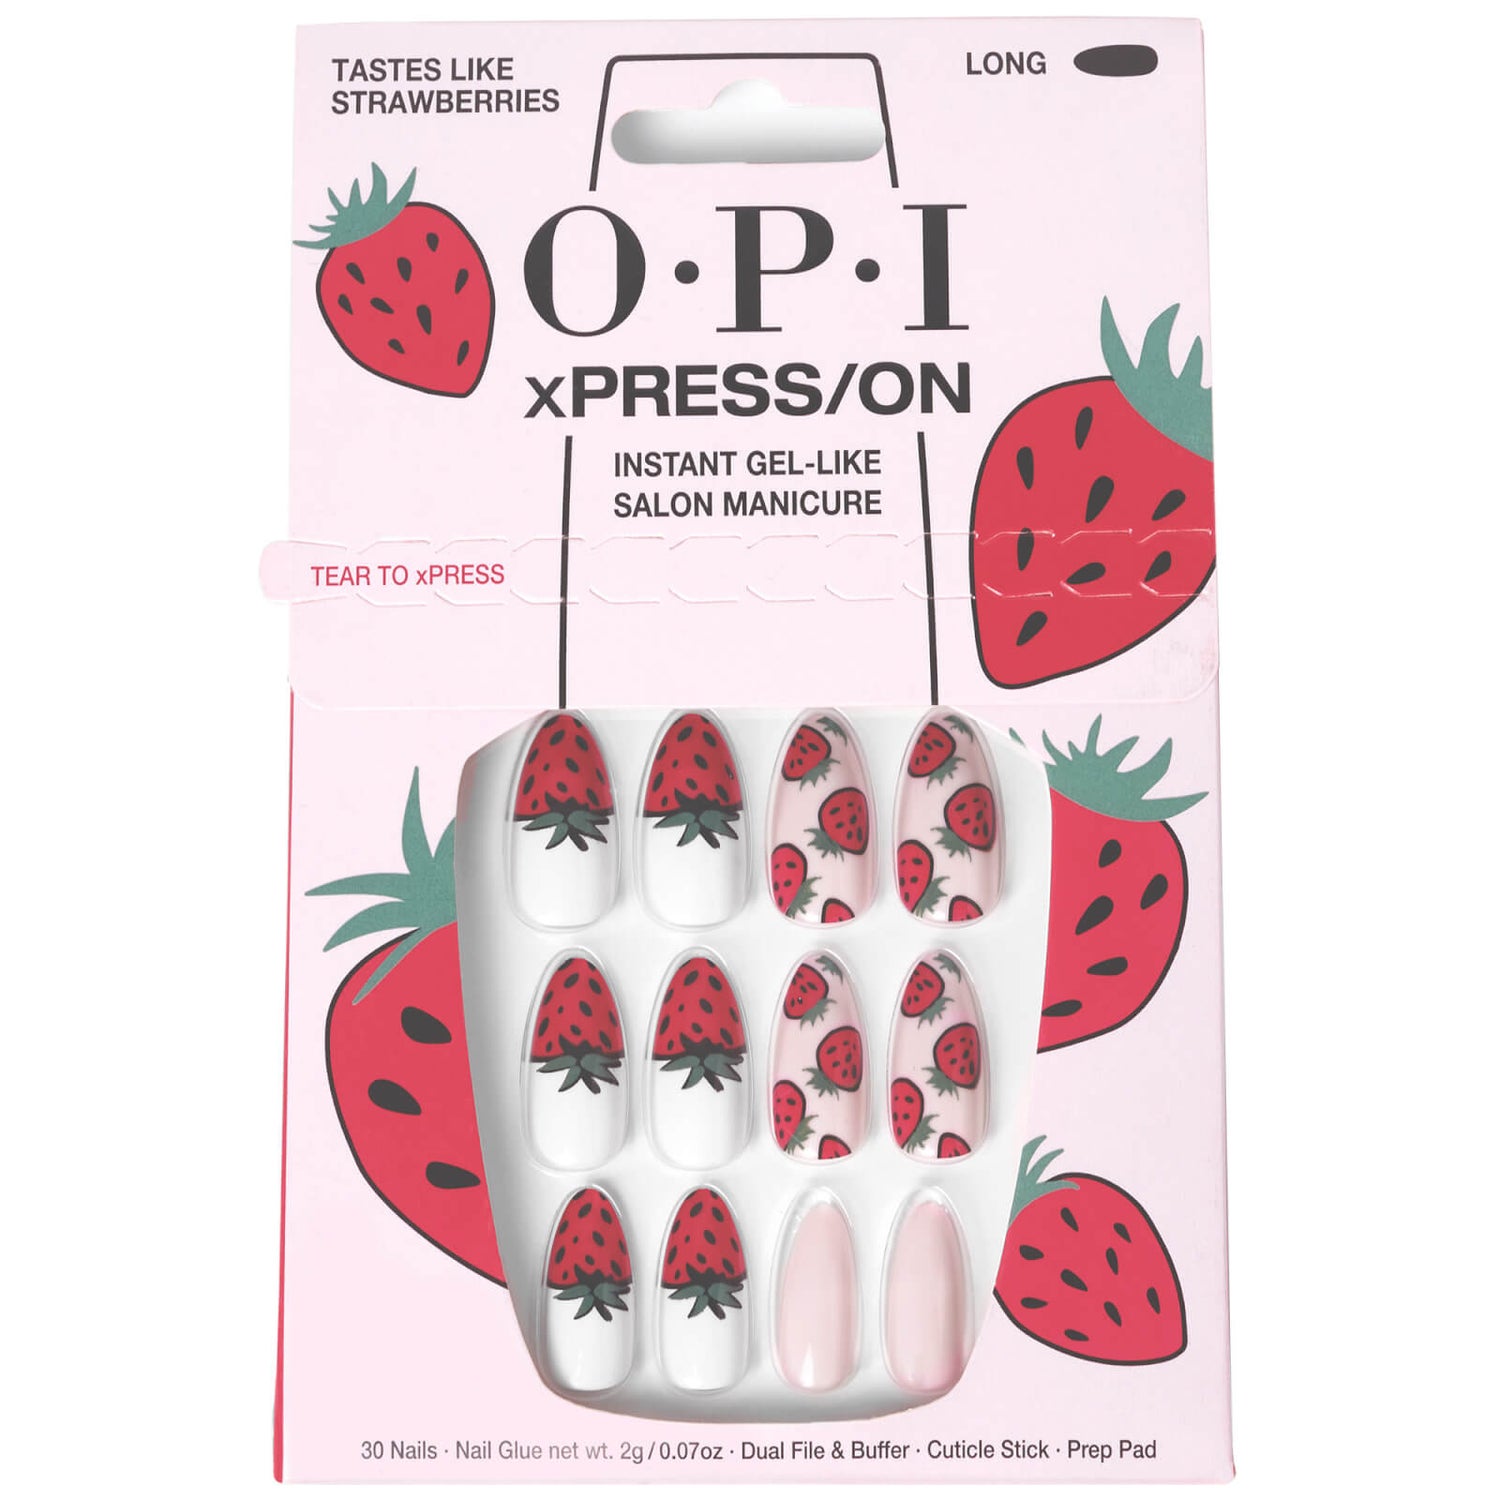 OPI xPRESS/ON - Tastes Like Strawberries Press On Nails Gel-Like Salon Manicure